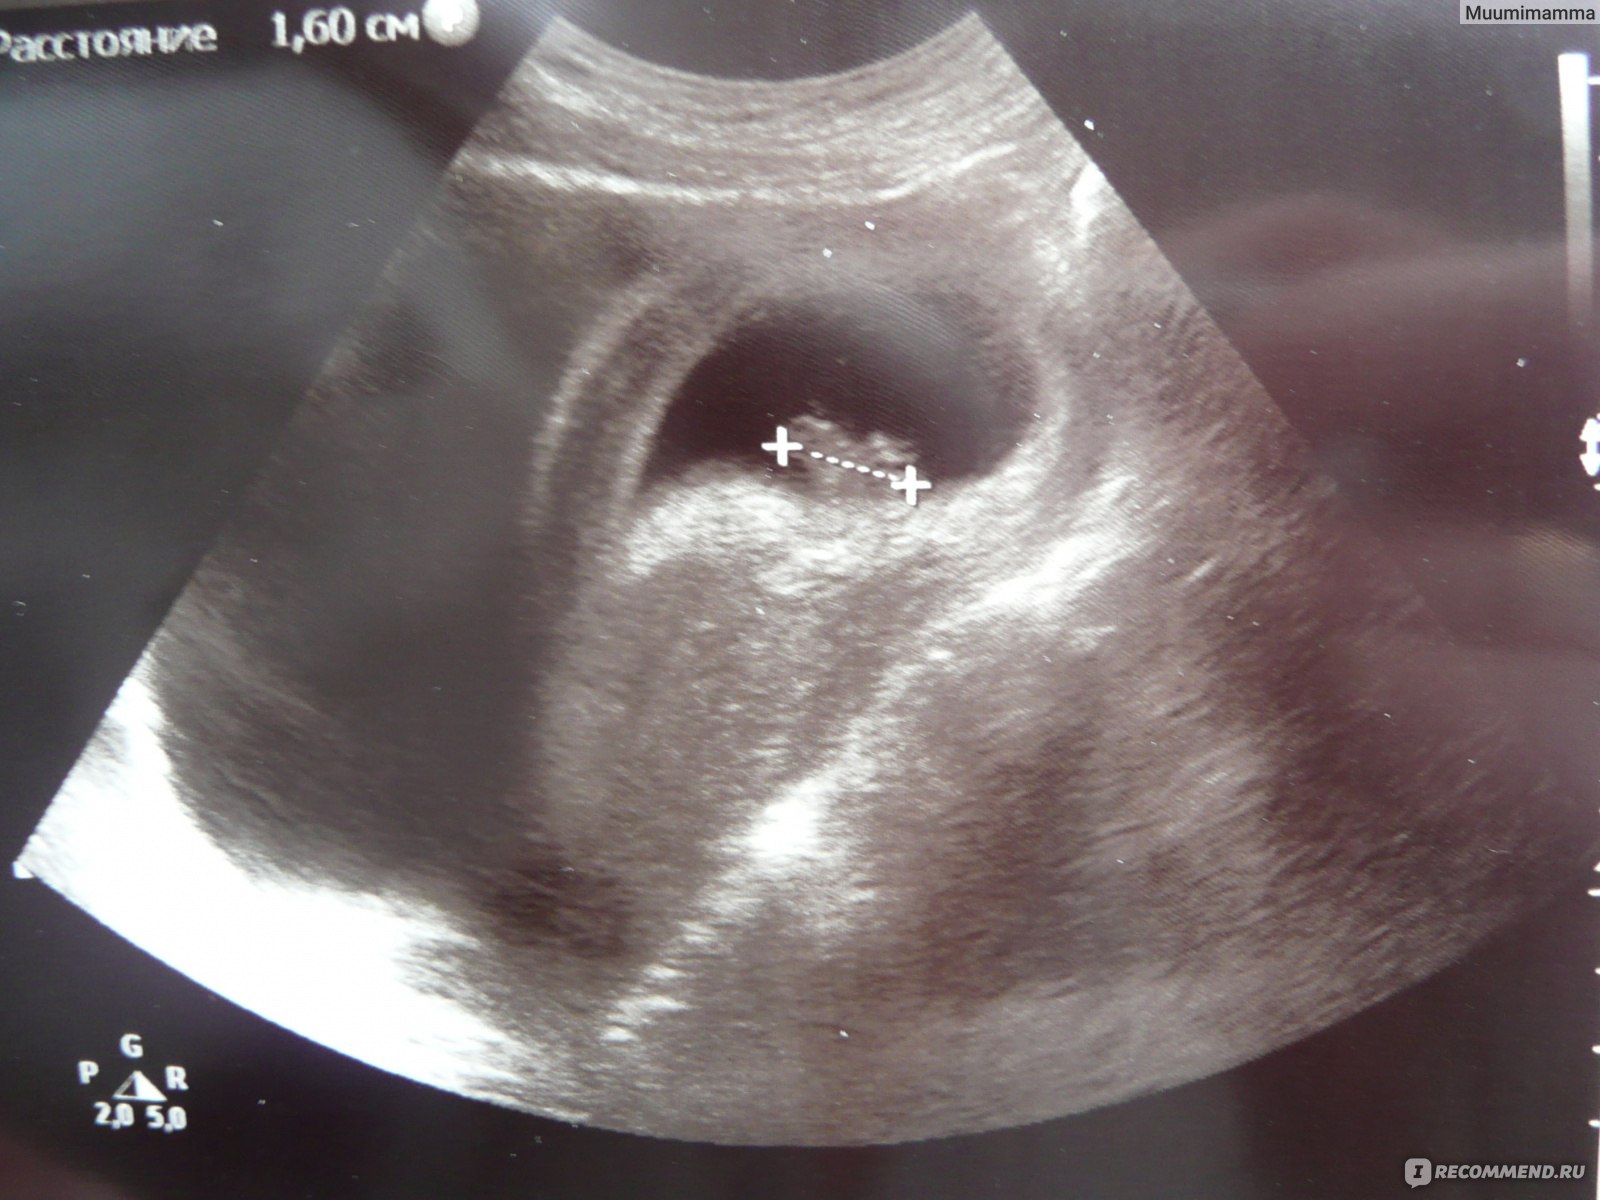 8 й недели неделе. Эмбрион на 8 неделе беременности УЗИ. УЗИ 8.5 недель беременности. 8 Недель беременности фото плода на УЗИ. Снимок ребёнка на УЗИ 8 недель беременности.